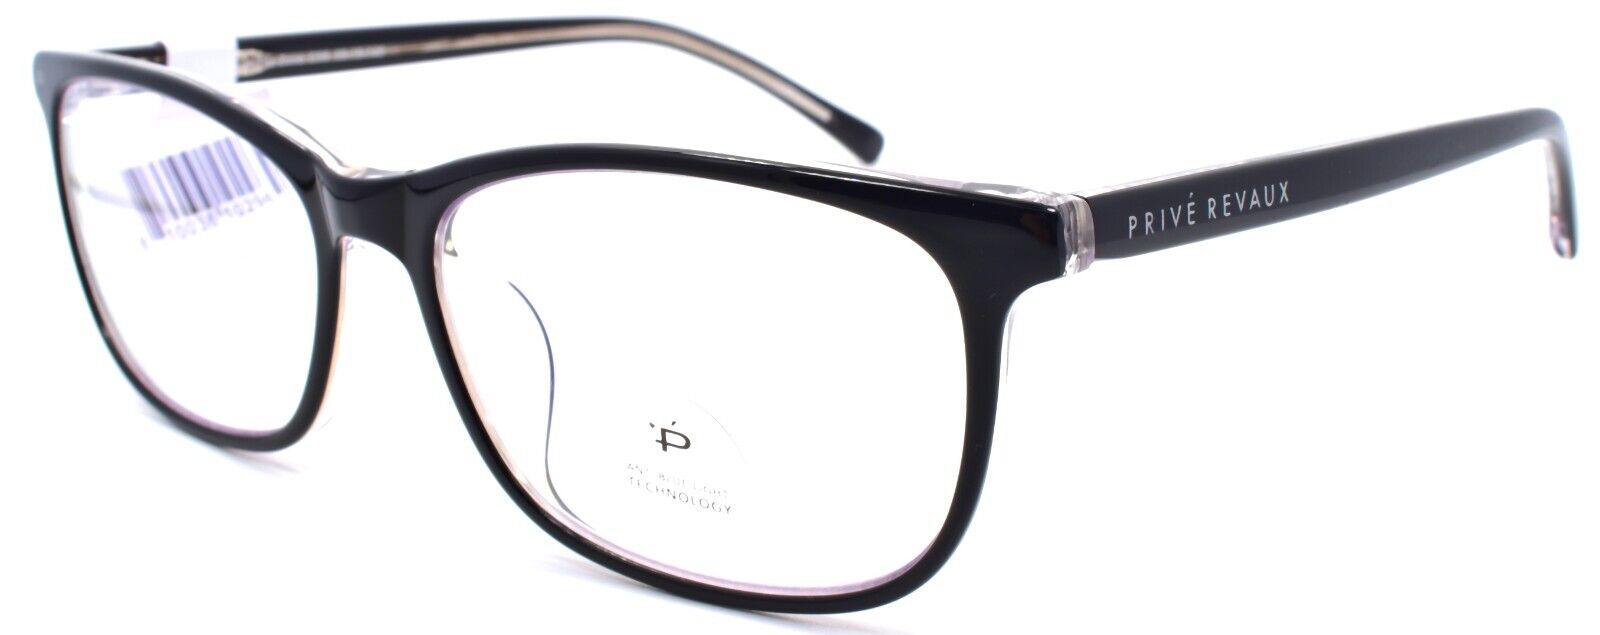 1-Prive Revaux In The Zone Eyeglasses Frames Blue Light Blocking RX-ready Black-810036102964-IKSpecs